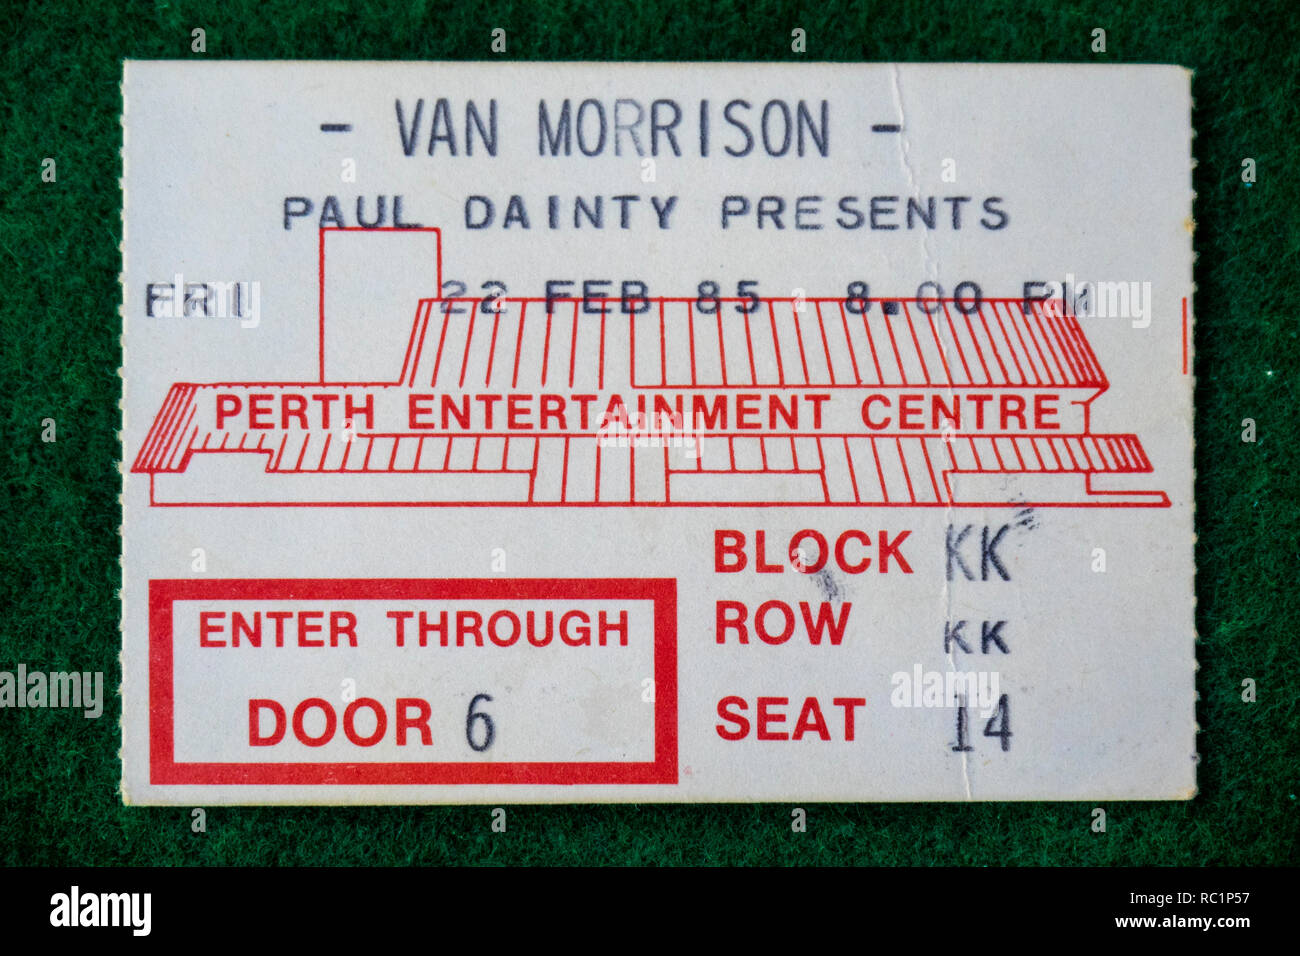 Ticket for Van Morrison concert at Perth Entertainment Centre in 1985 WA Australia. Stock Photo